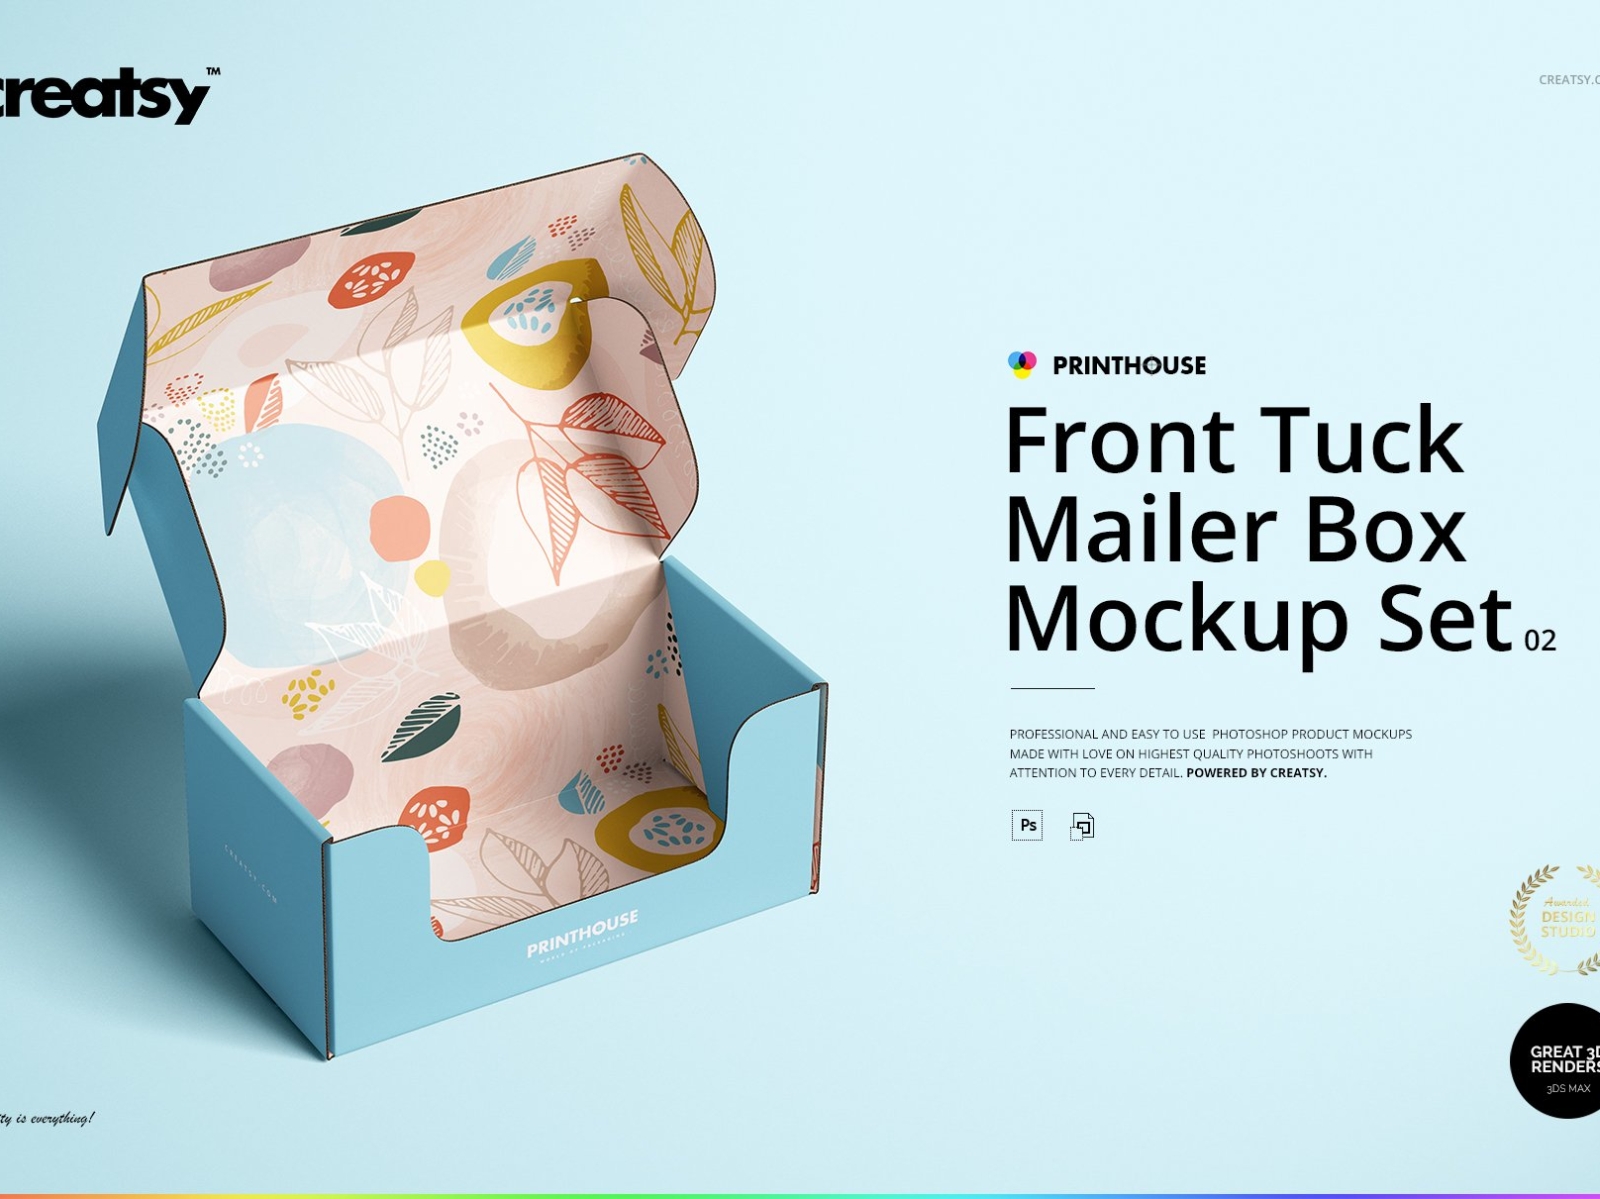 Download Front Tuck Mailer Box Mockup Set 02 by Mockup5 on Dribbble